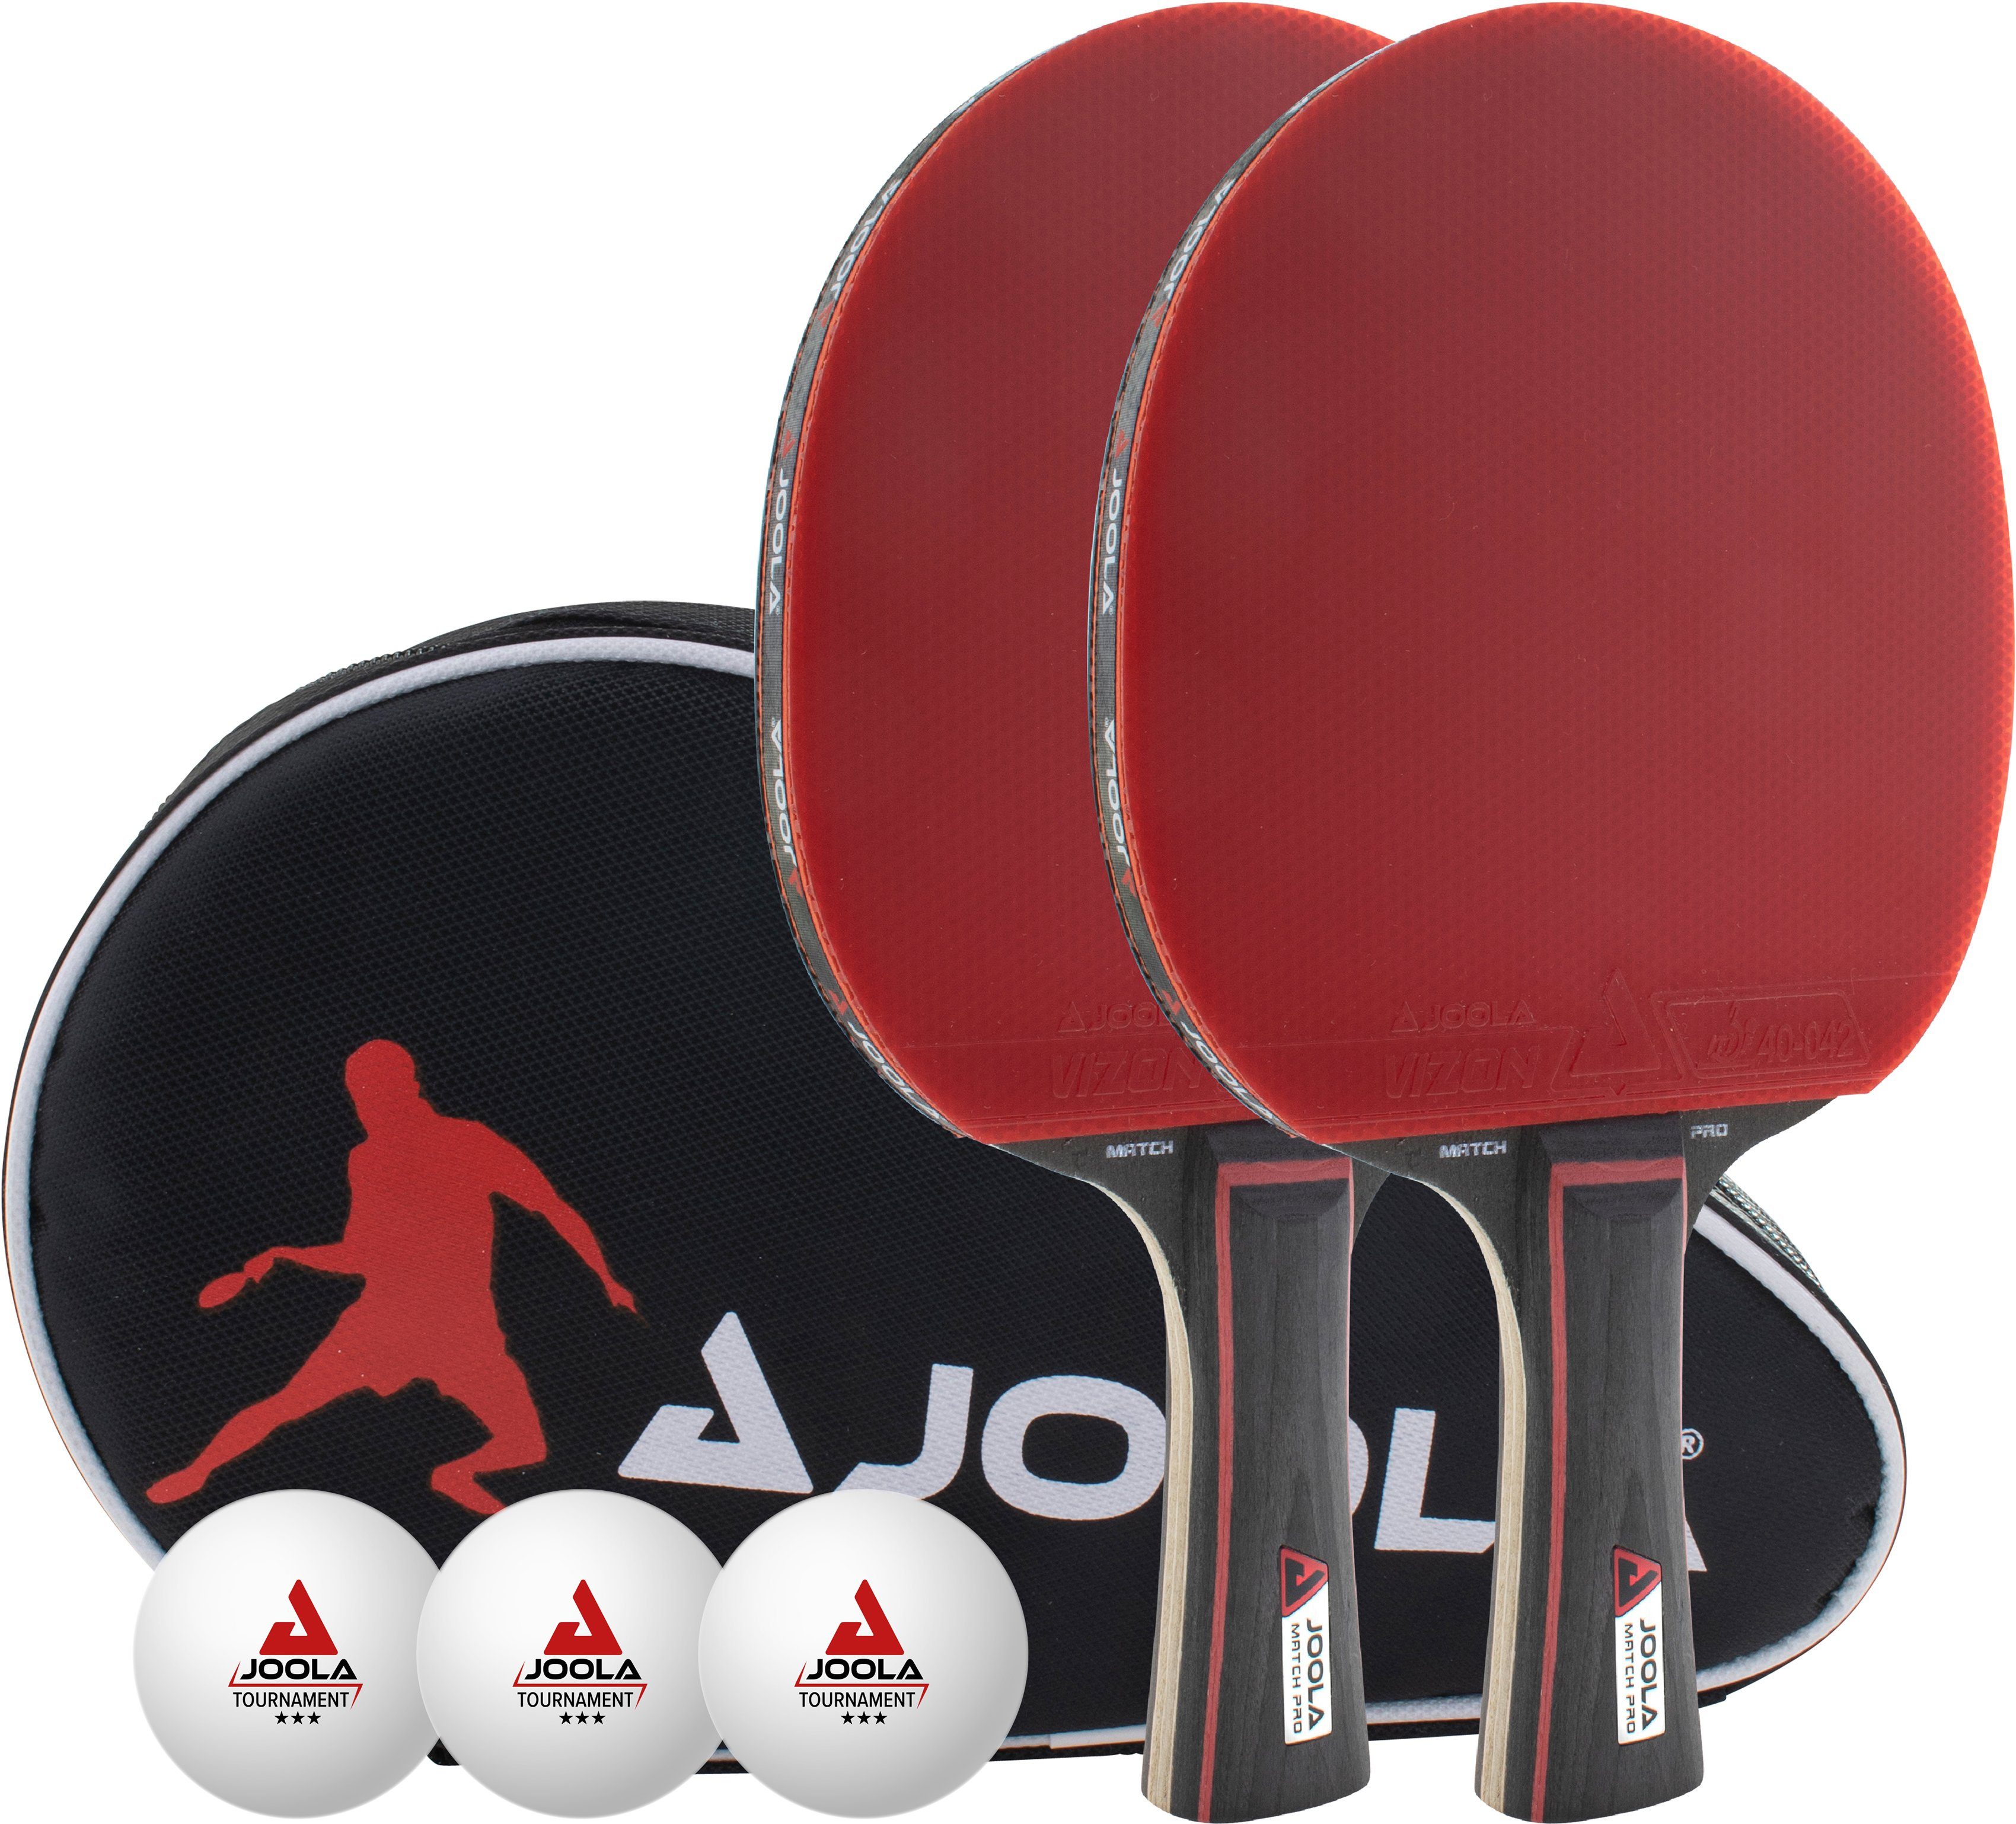 Tasche Tischtennis Ping Pong Set DE Tischtennisschläger 2 Schläger mit 3 Bälle 